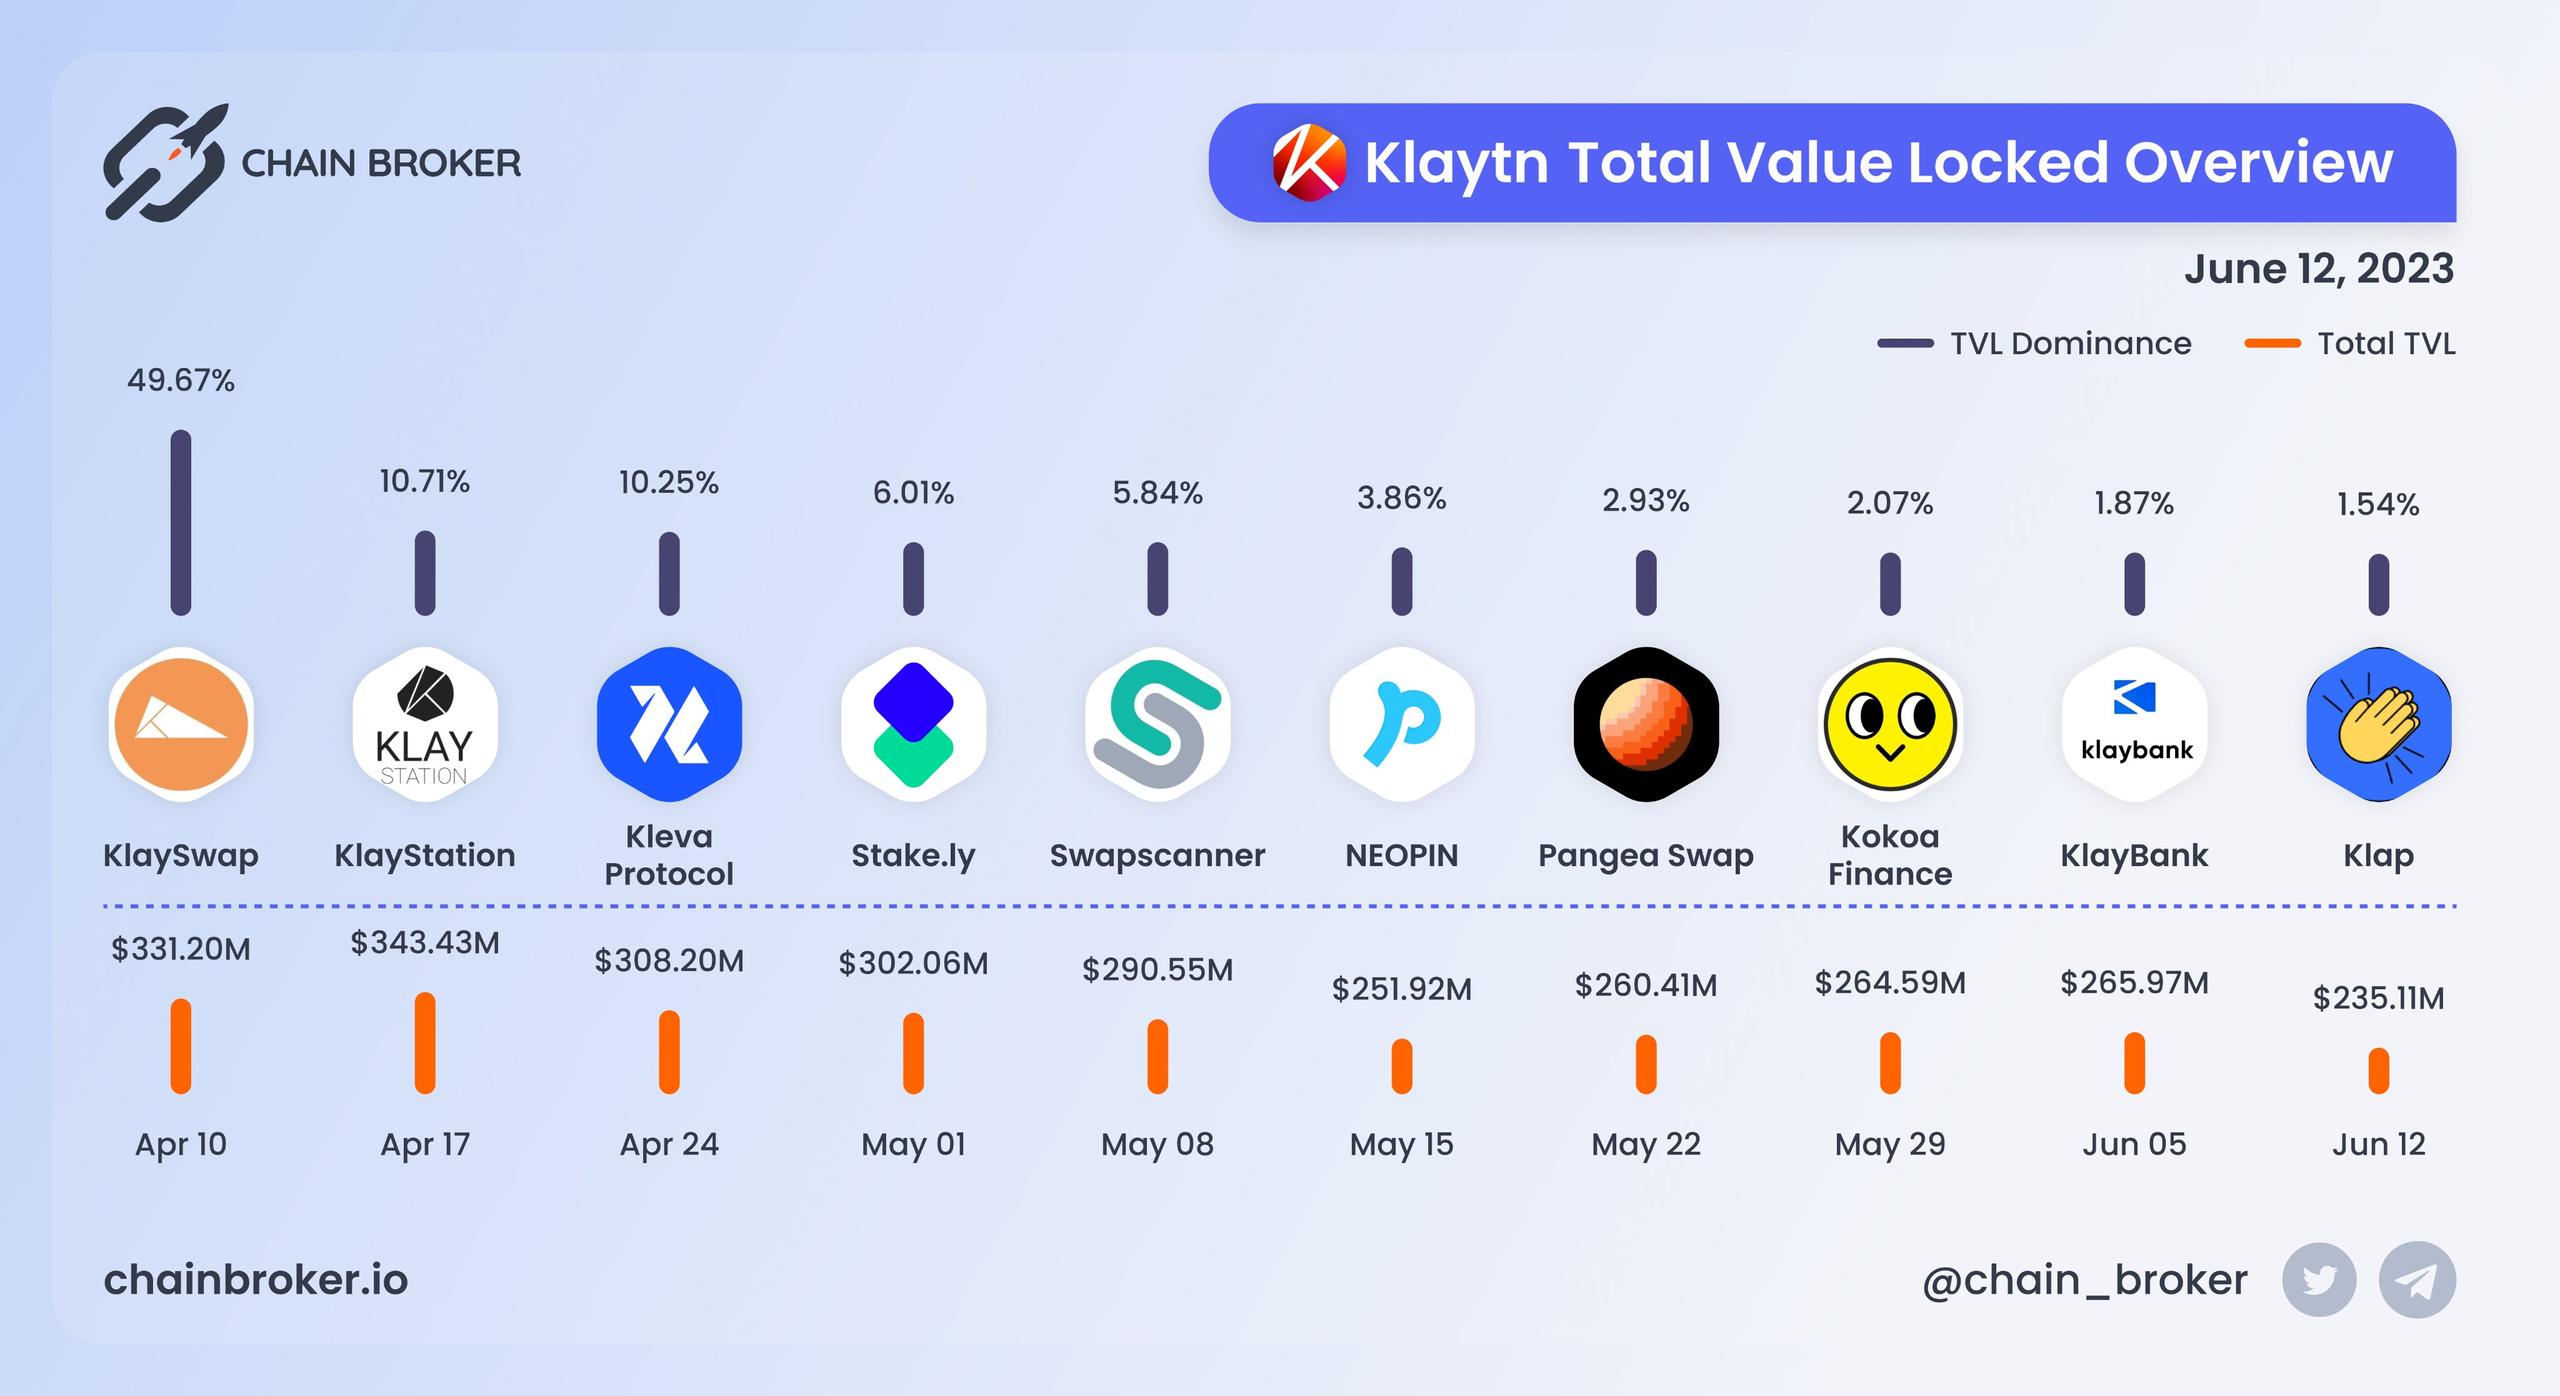 Klaytn total value locked overview